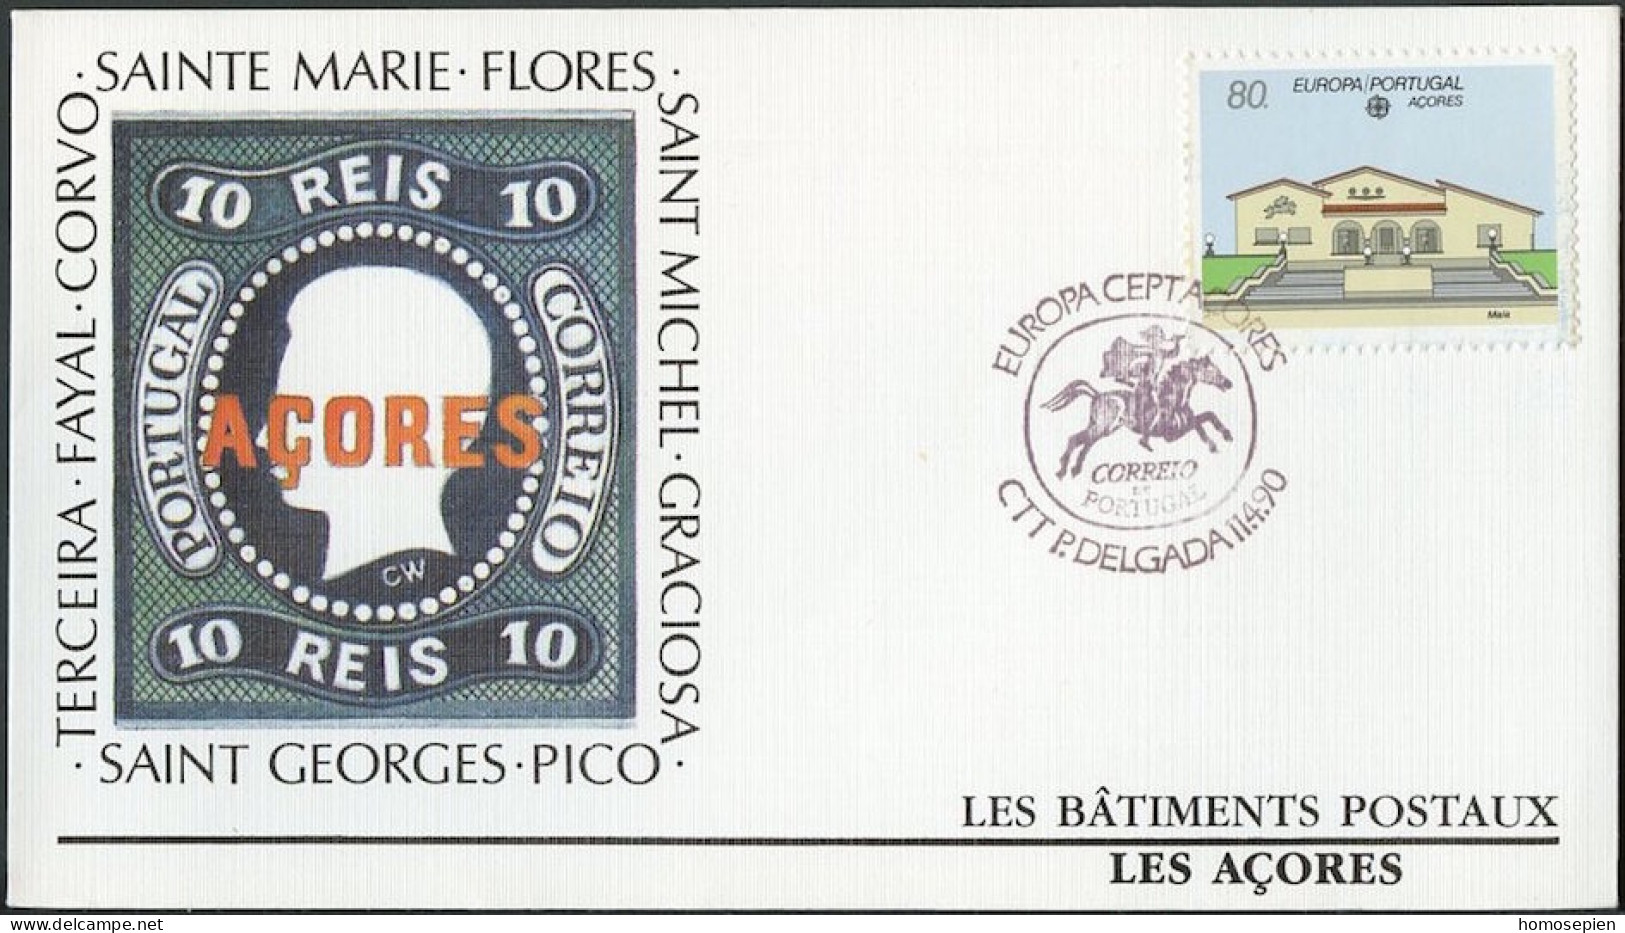 Açores - Azores - Azoren - Portugal FDC 1990 Y&T N°400 - Michel N°410 - 80e EUROPA - FDC